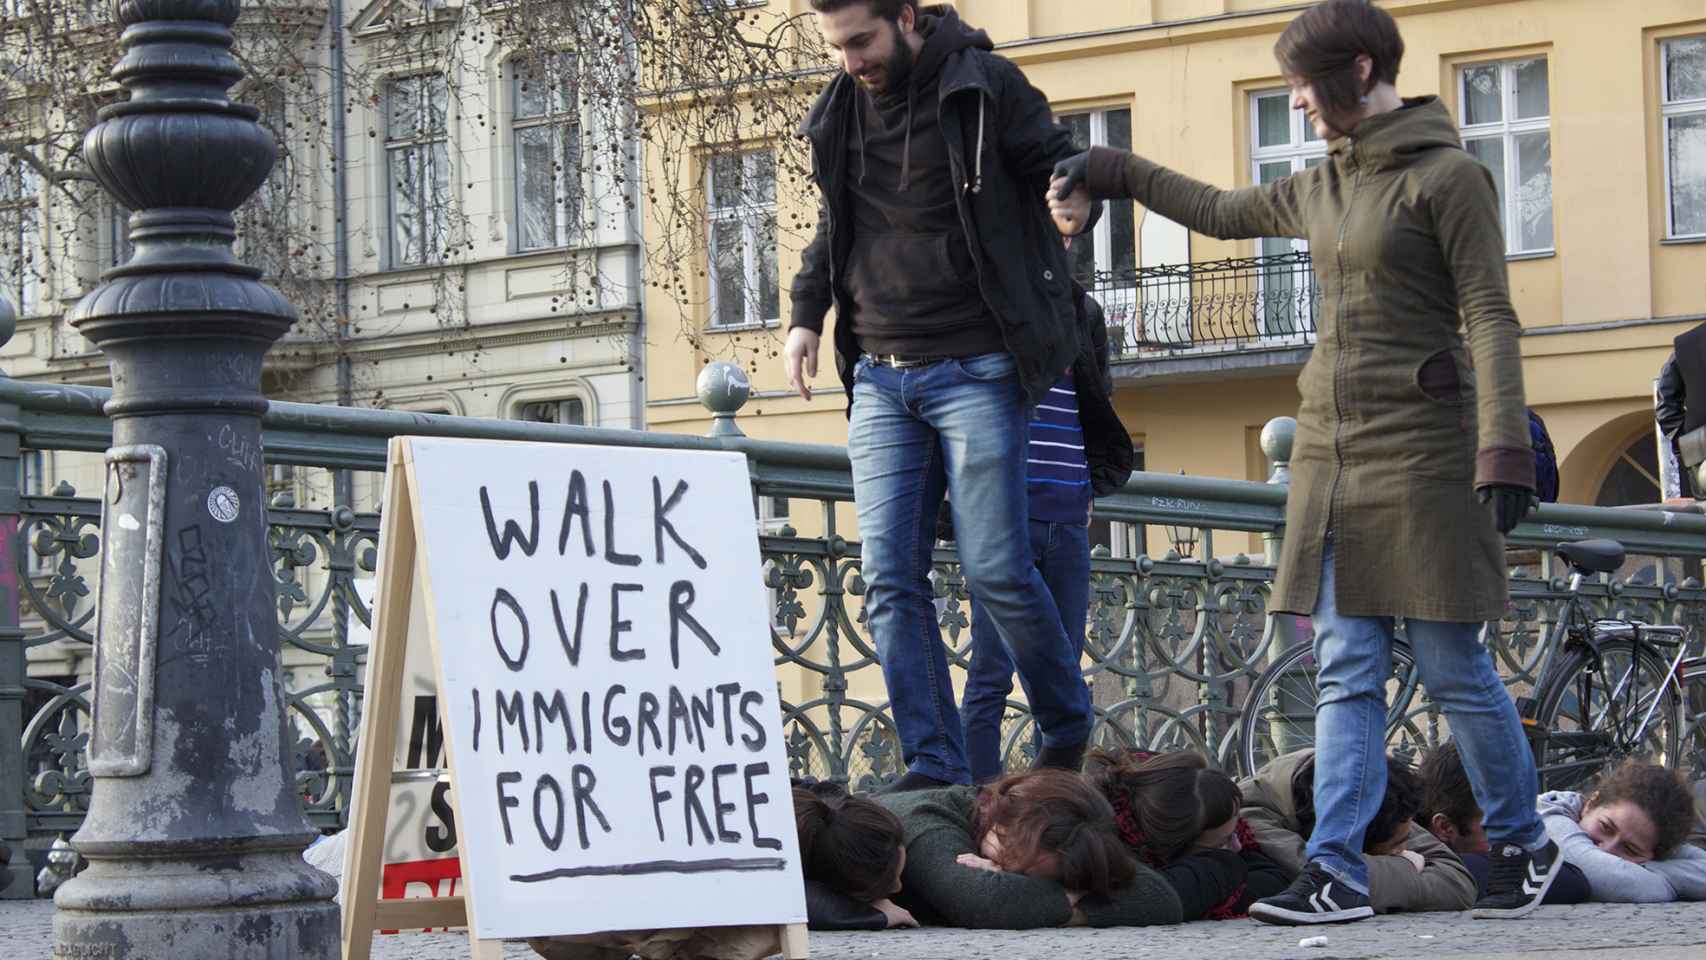 Performance Camina sobre inmigrantes gratis